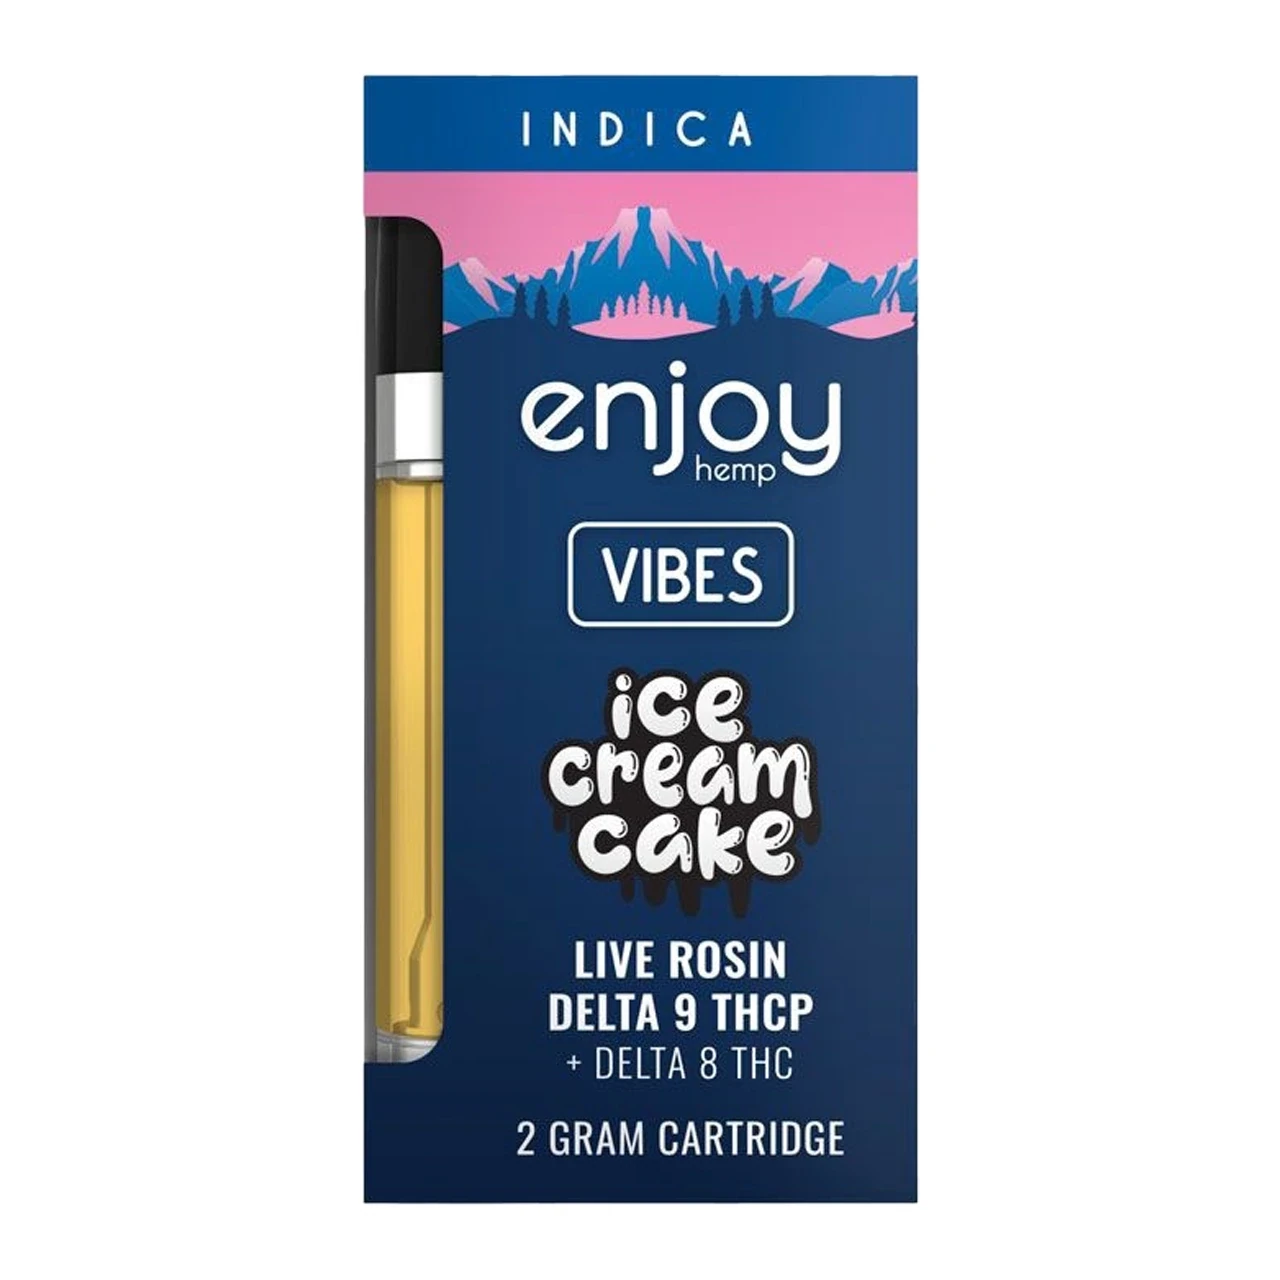 Enjoy: Vibes Delta 9 THCp + Delta 8 THC Live Rosin Ice Cream Cake Vape 2g Cartridge